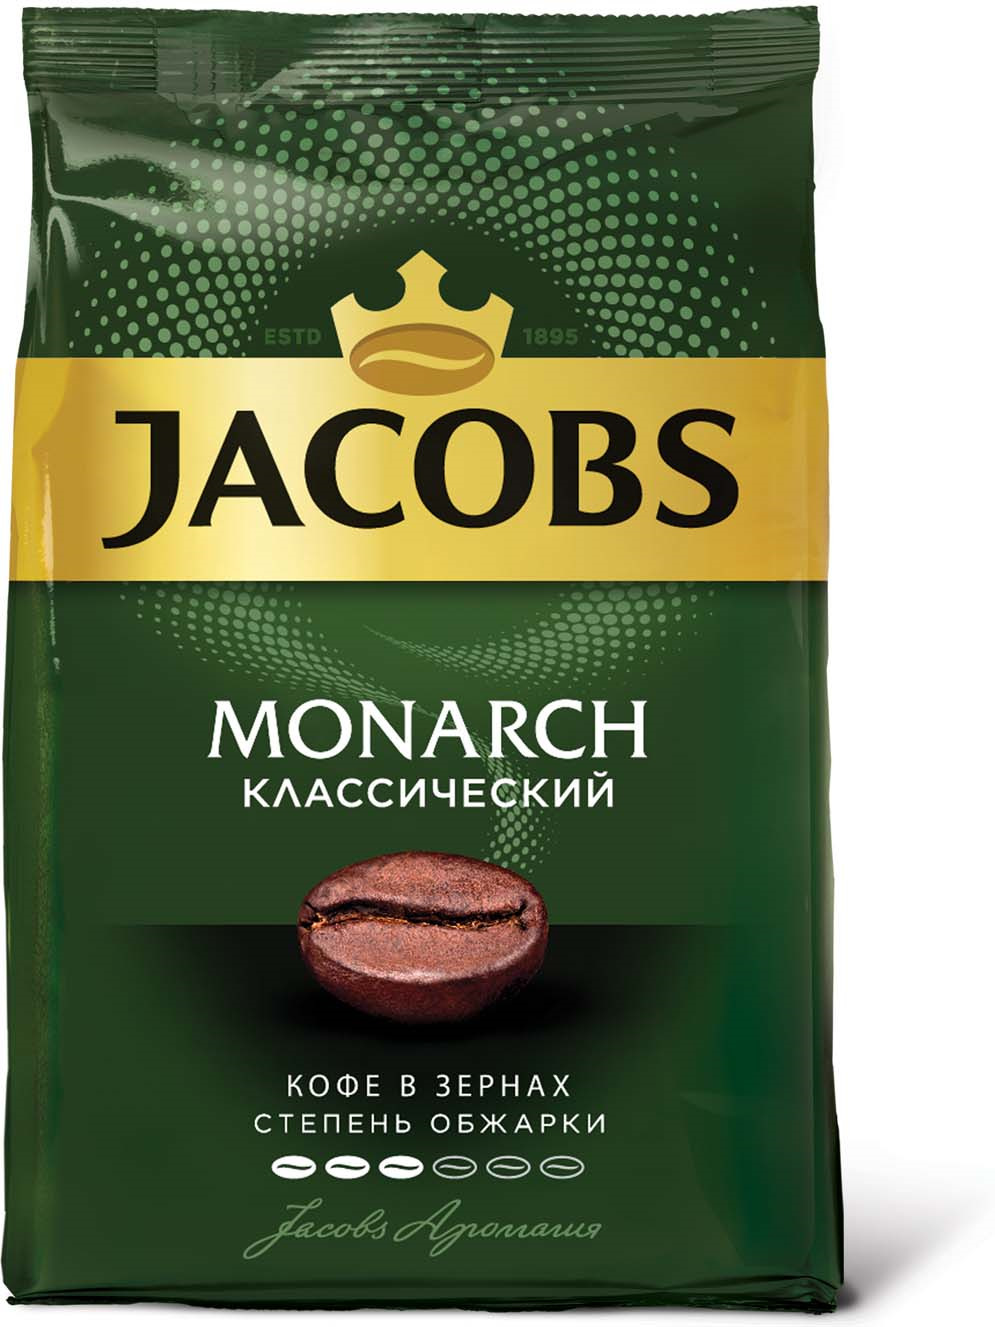 Jacobs Monarch кофе в зернах, 800 г